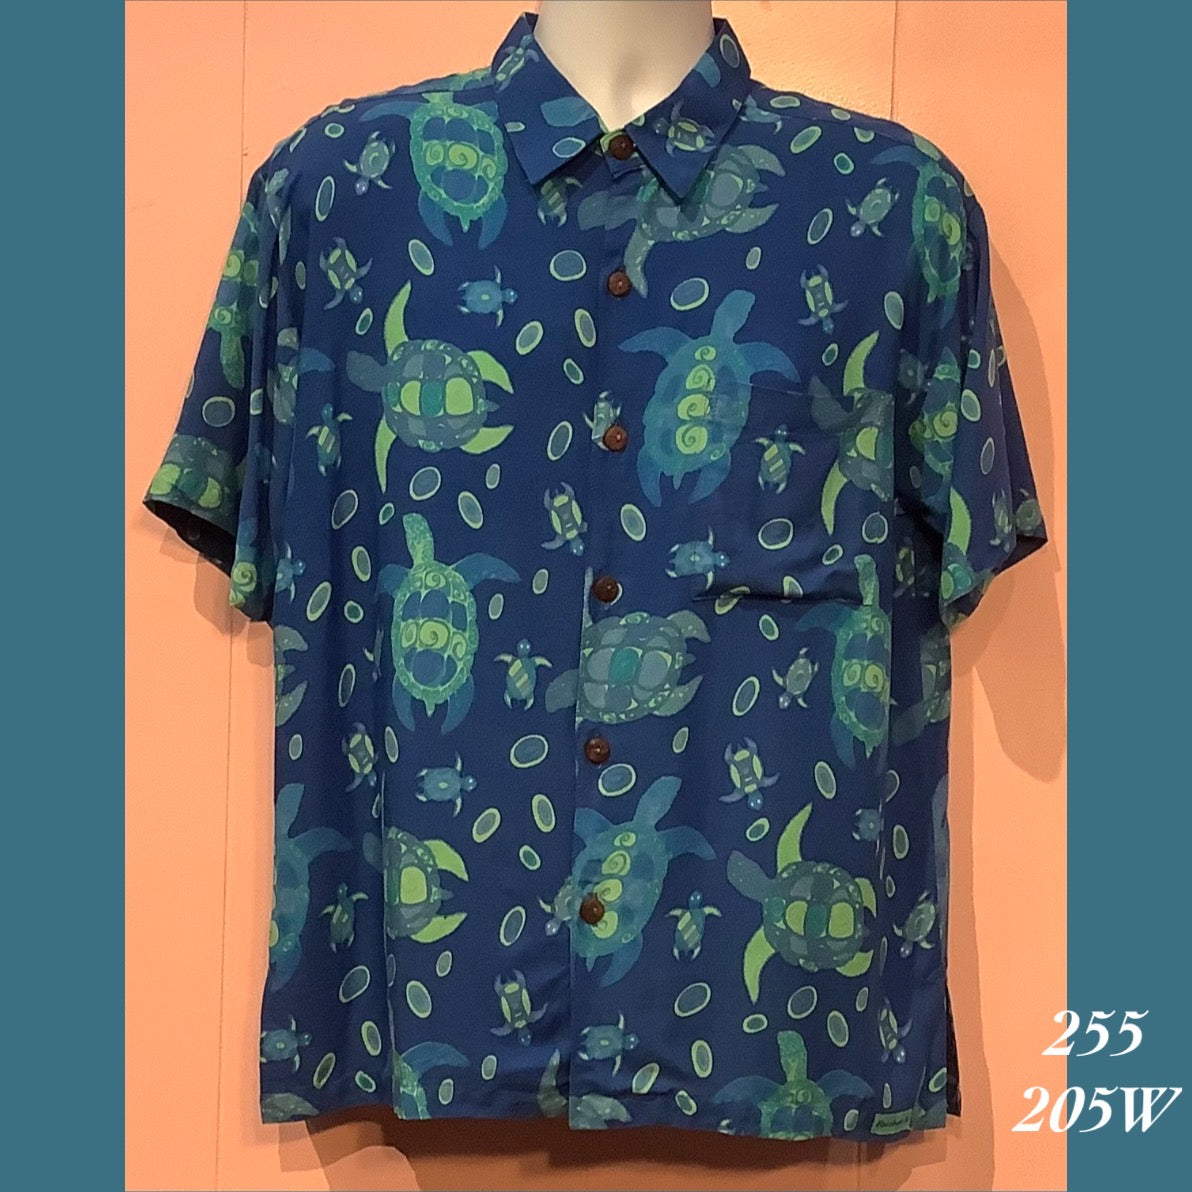 255 - 205W , Men's Aloha shirt